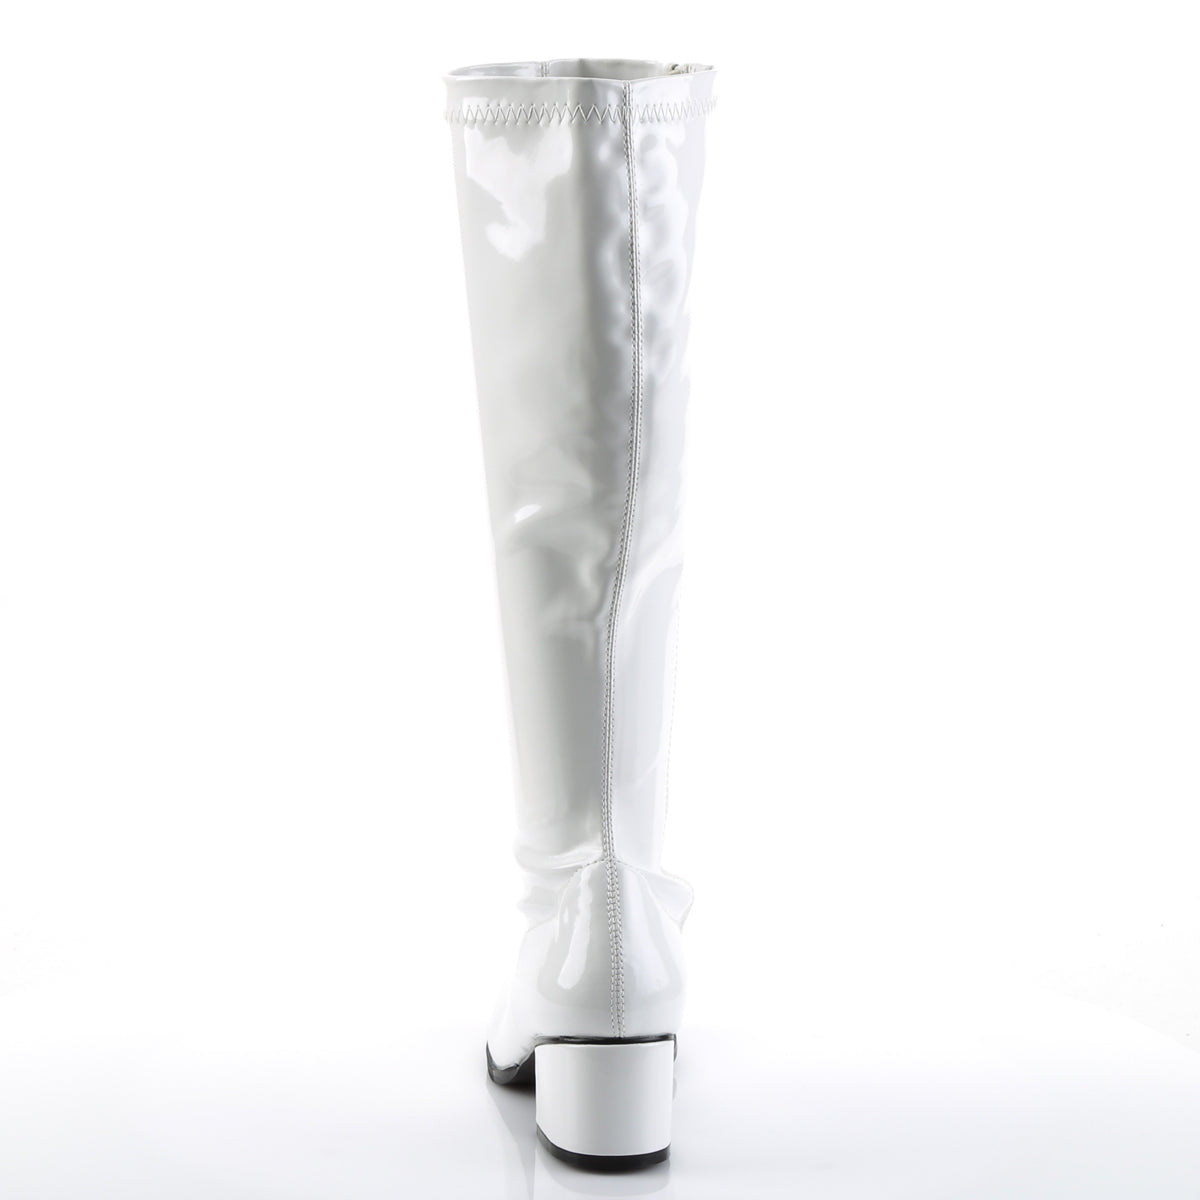 RETRO-300 Funtasma Fantasy White Stretch Patent Women's Boots [Fancy Dress Footwear]